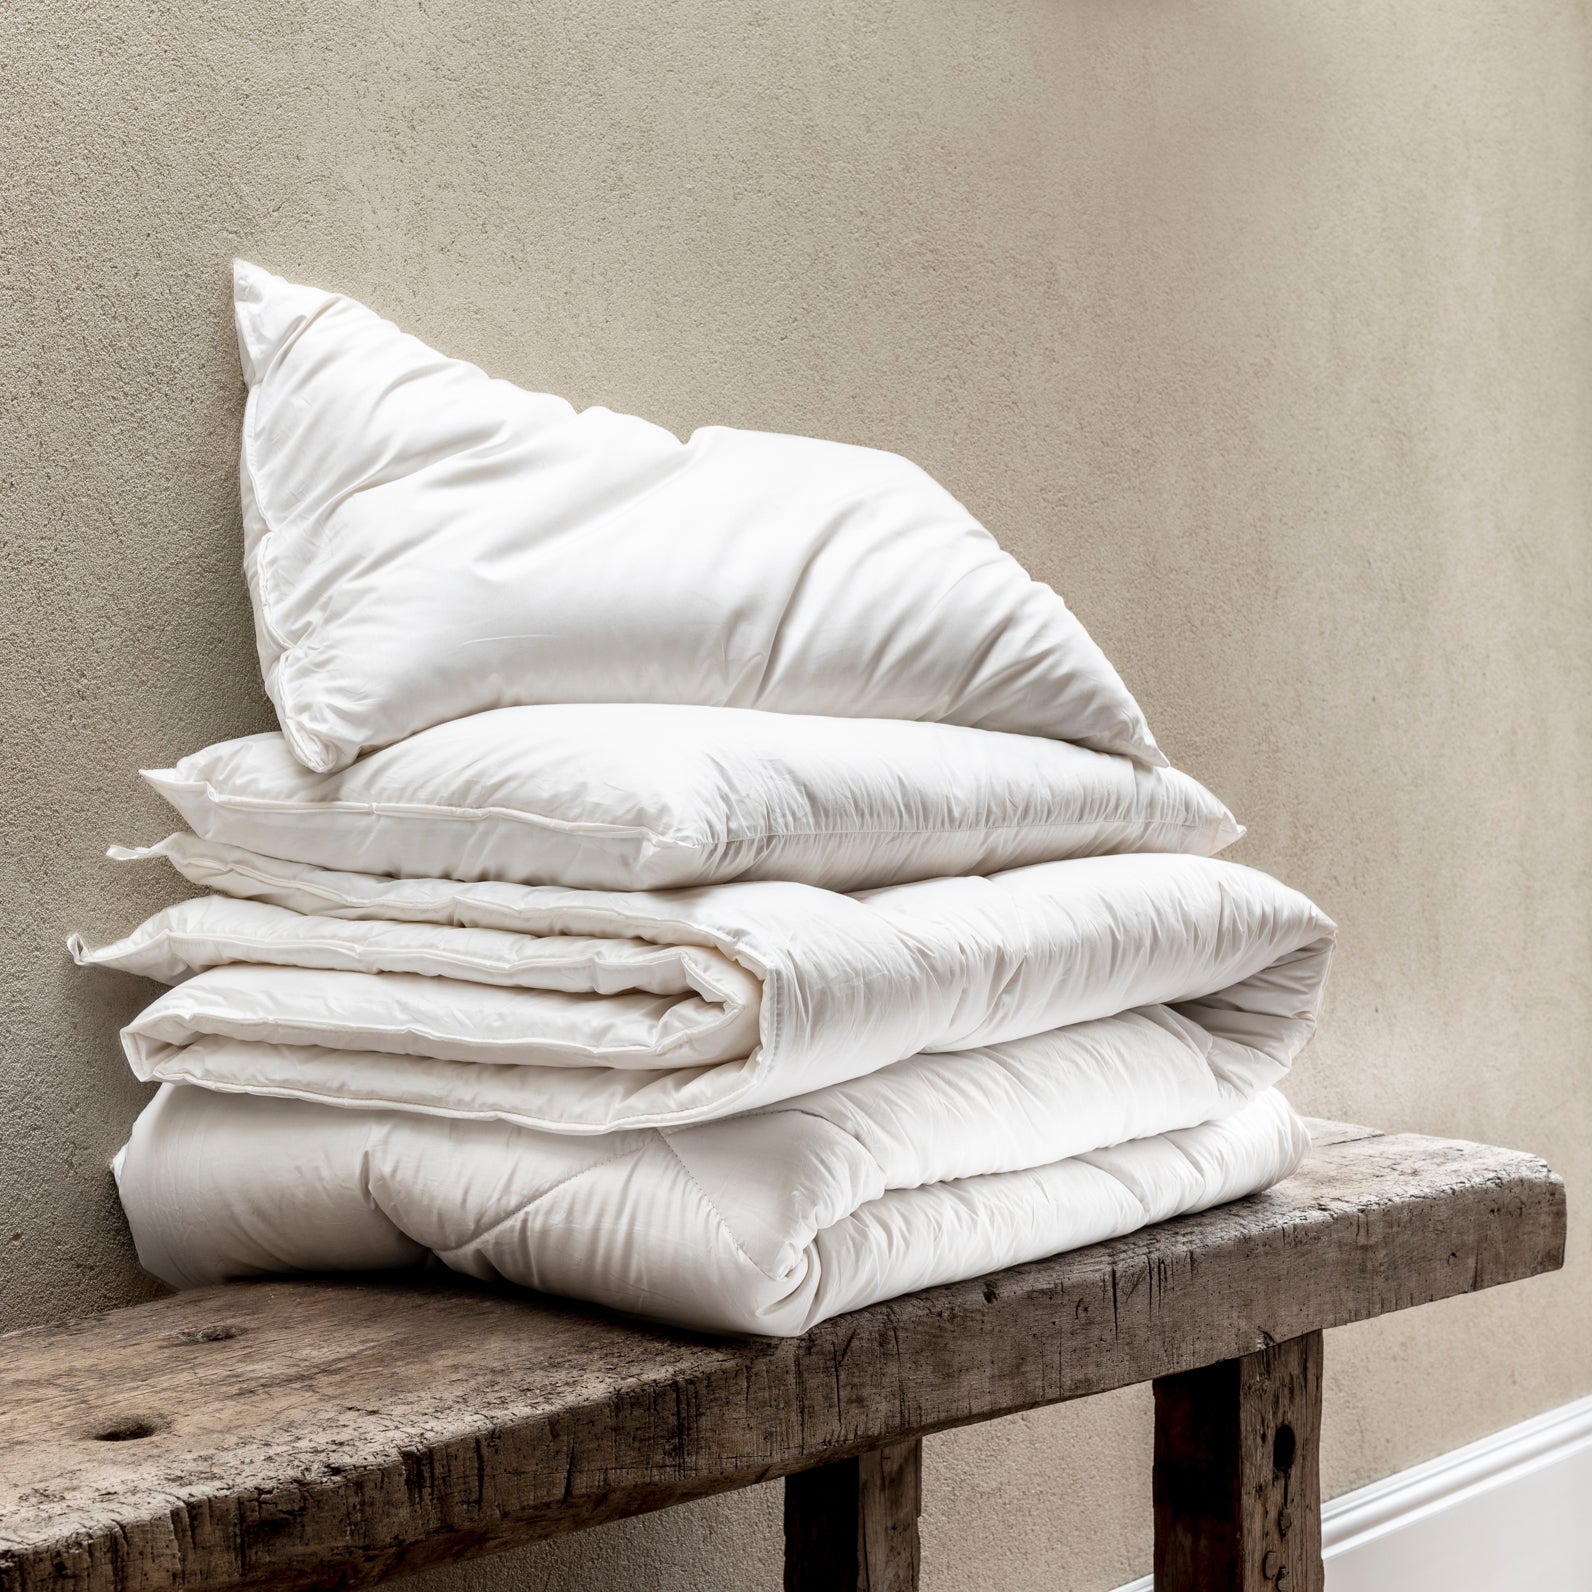 Merino Wool Pillows and Duvets